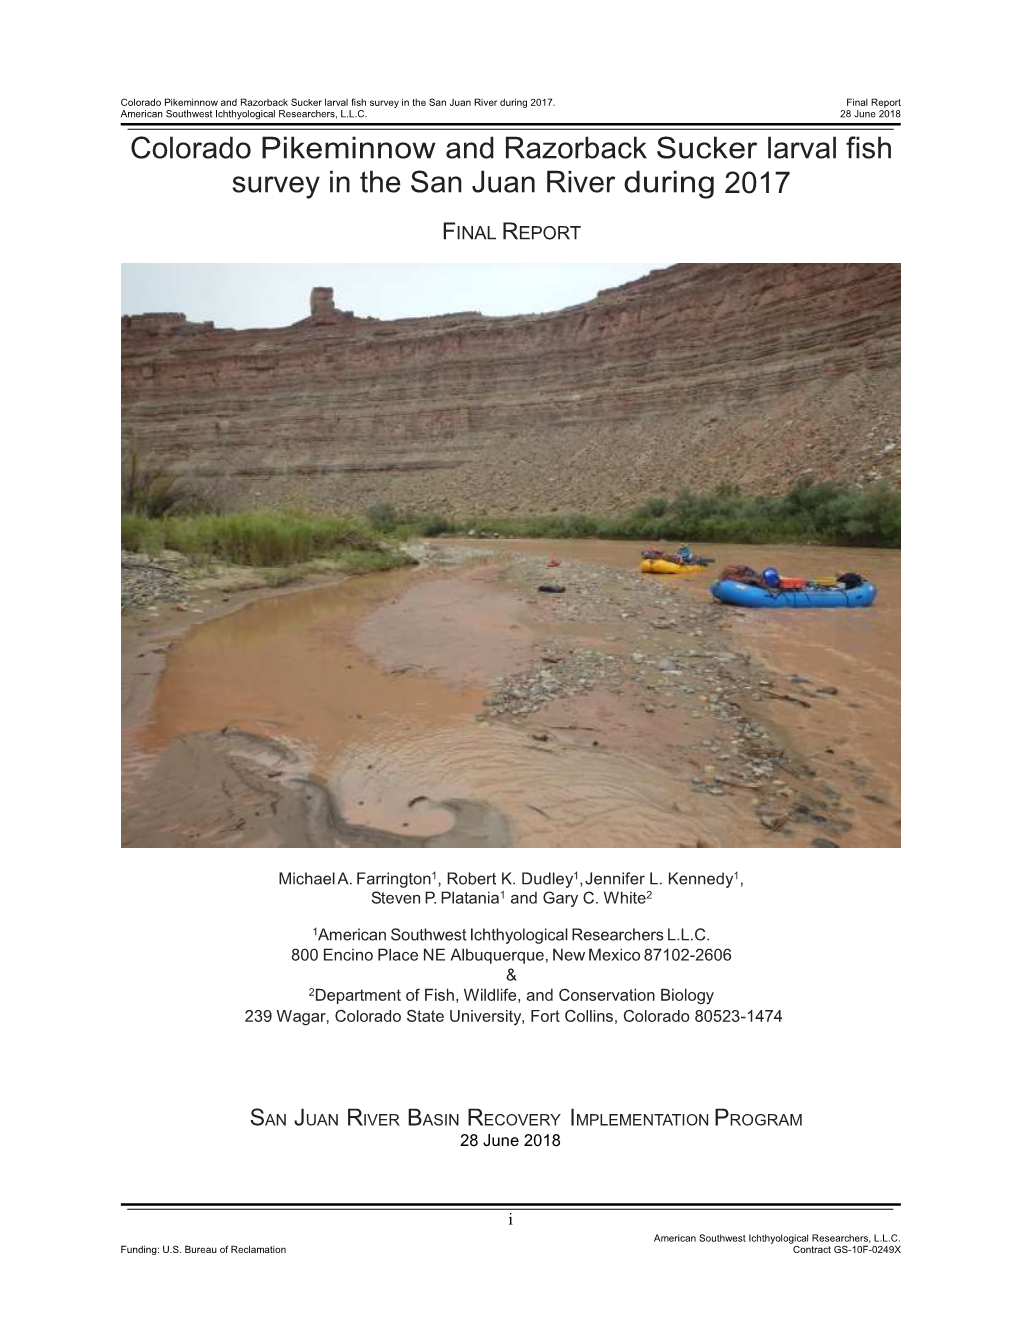 Colorado Pikeminnow and Razorback Sucker Larval Fish Survey in the San Juan River During 2017